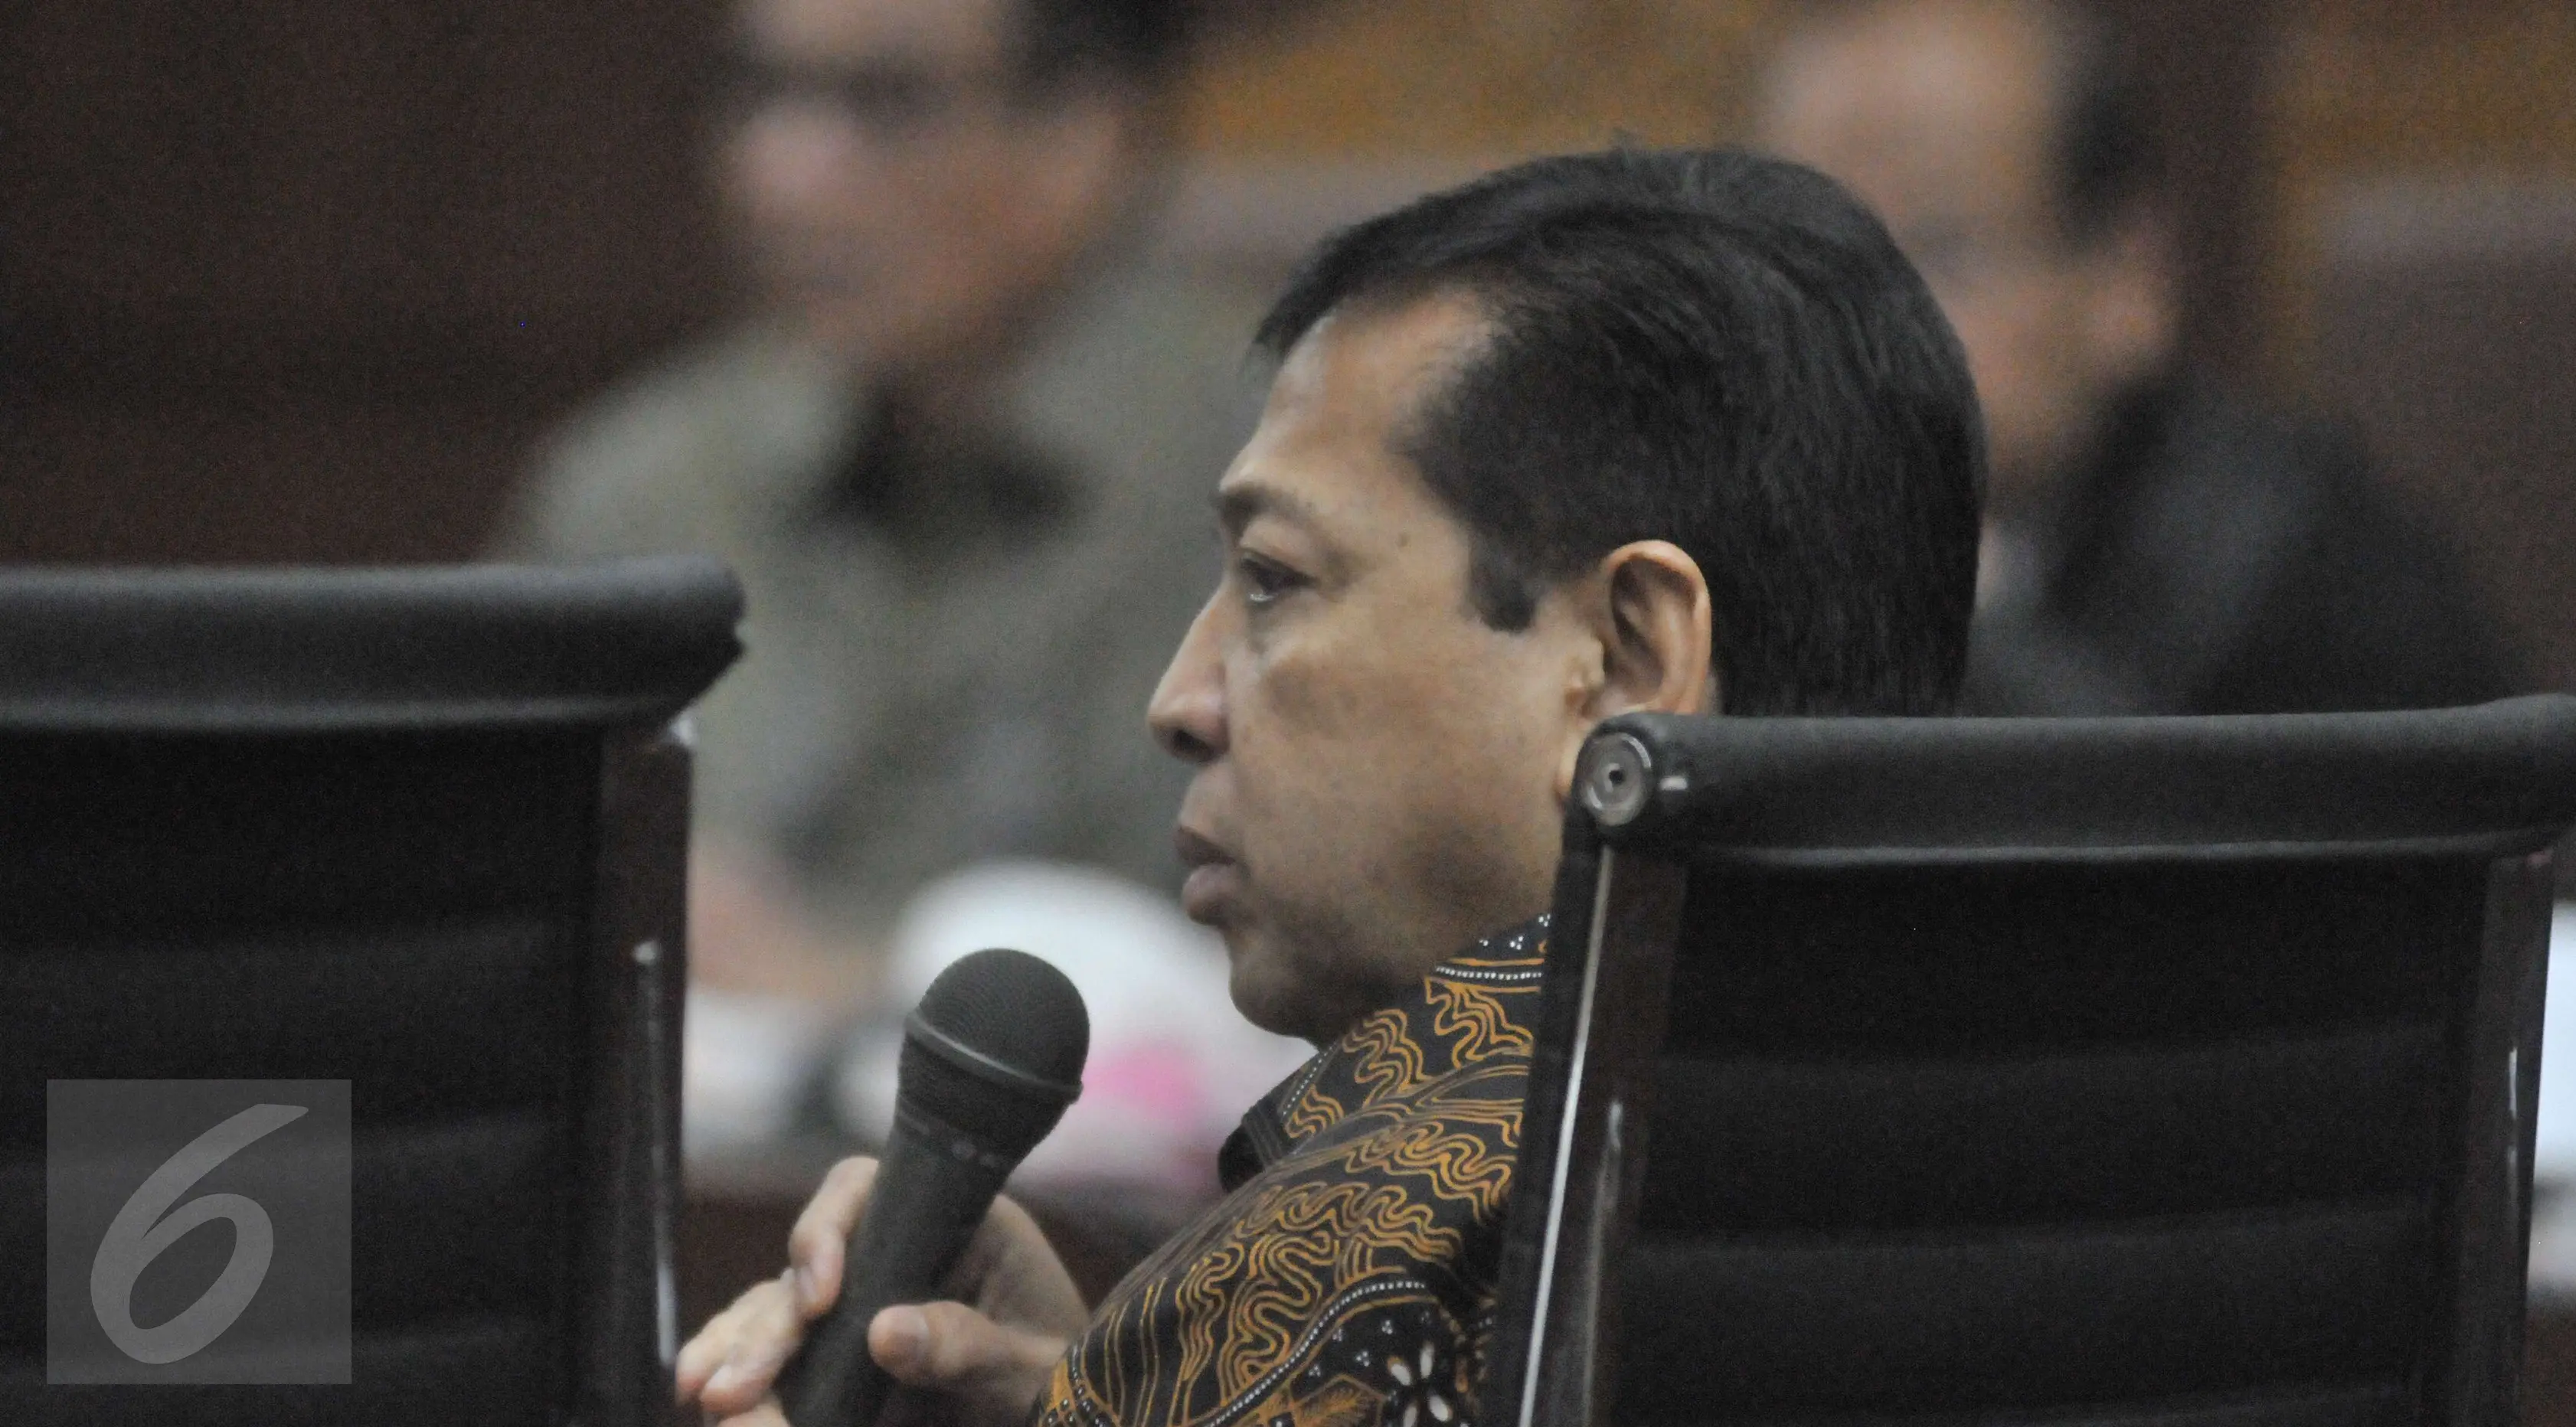 Ketua DPR Setya Novanto memberikan kesaksian dalam sidang kasus korupsi e-KTP di Pengadilan Tipikor Jakarta, Kamis (6/4). Delapan orang saksi dihadirkan Jaksa Penuntut Umum dalam sidang kelima kasus mega korupsi e-KTP ini. (Liputan6.com/Helmi Afandi)